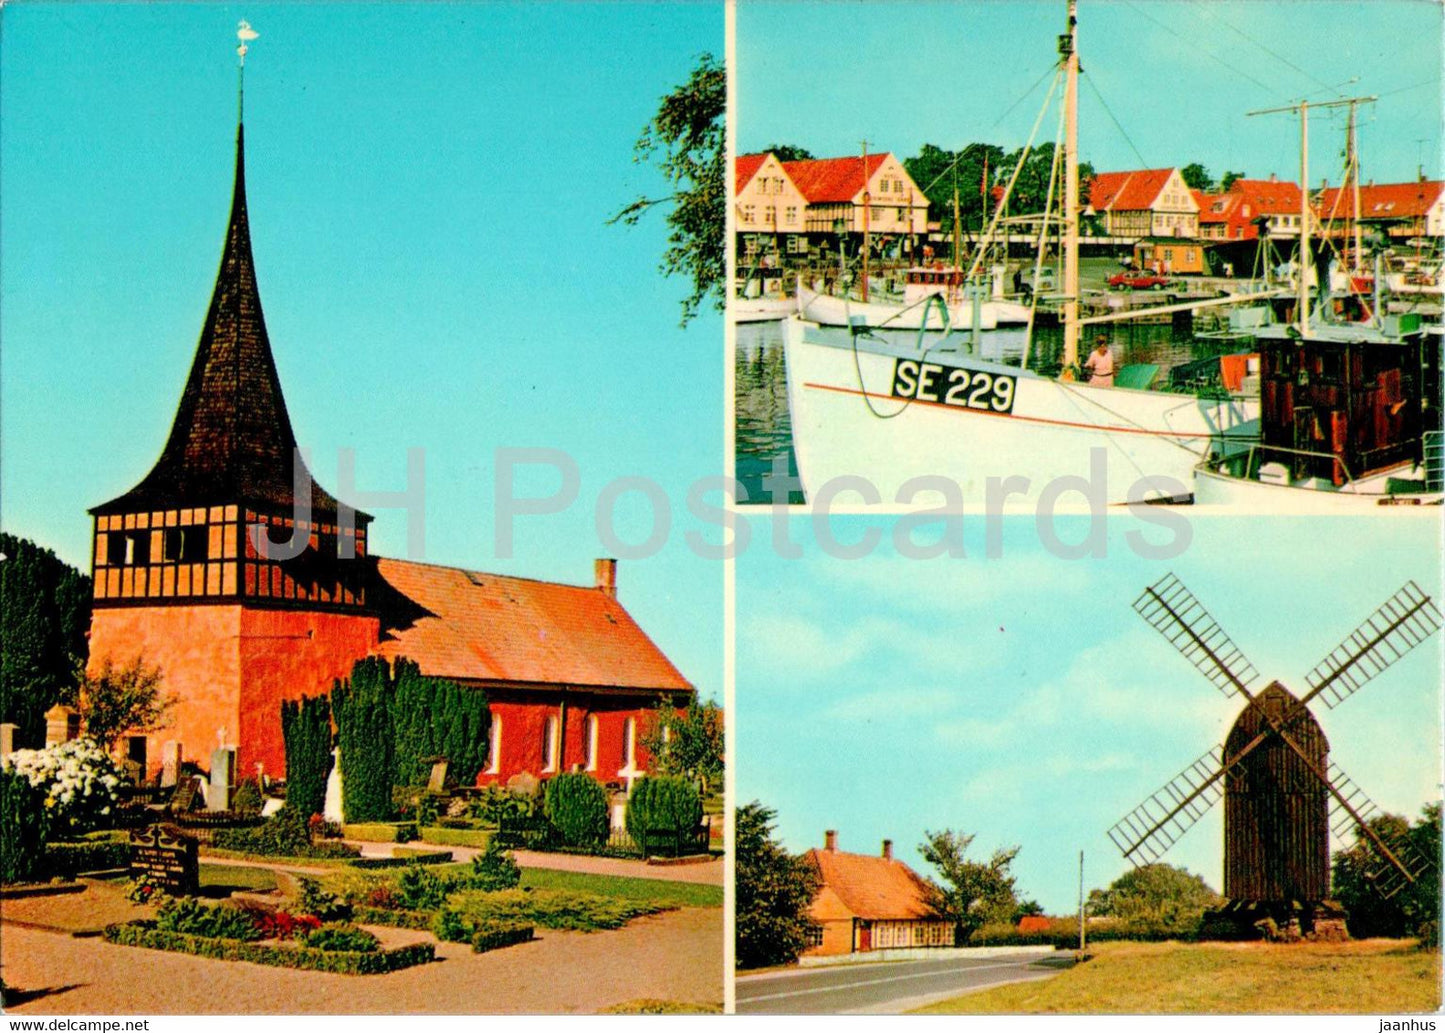 Bornholm - Partier fra Svaneke - ship - boat - church - windmill - multiview - Denmark - unused - JH Postcards